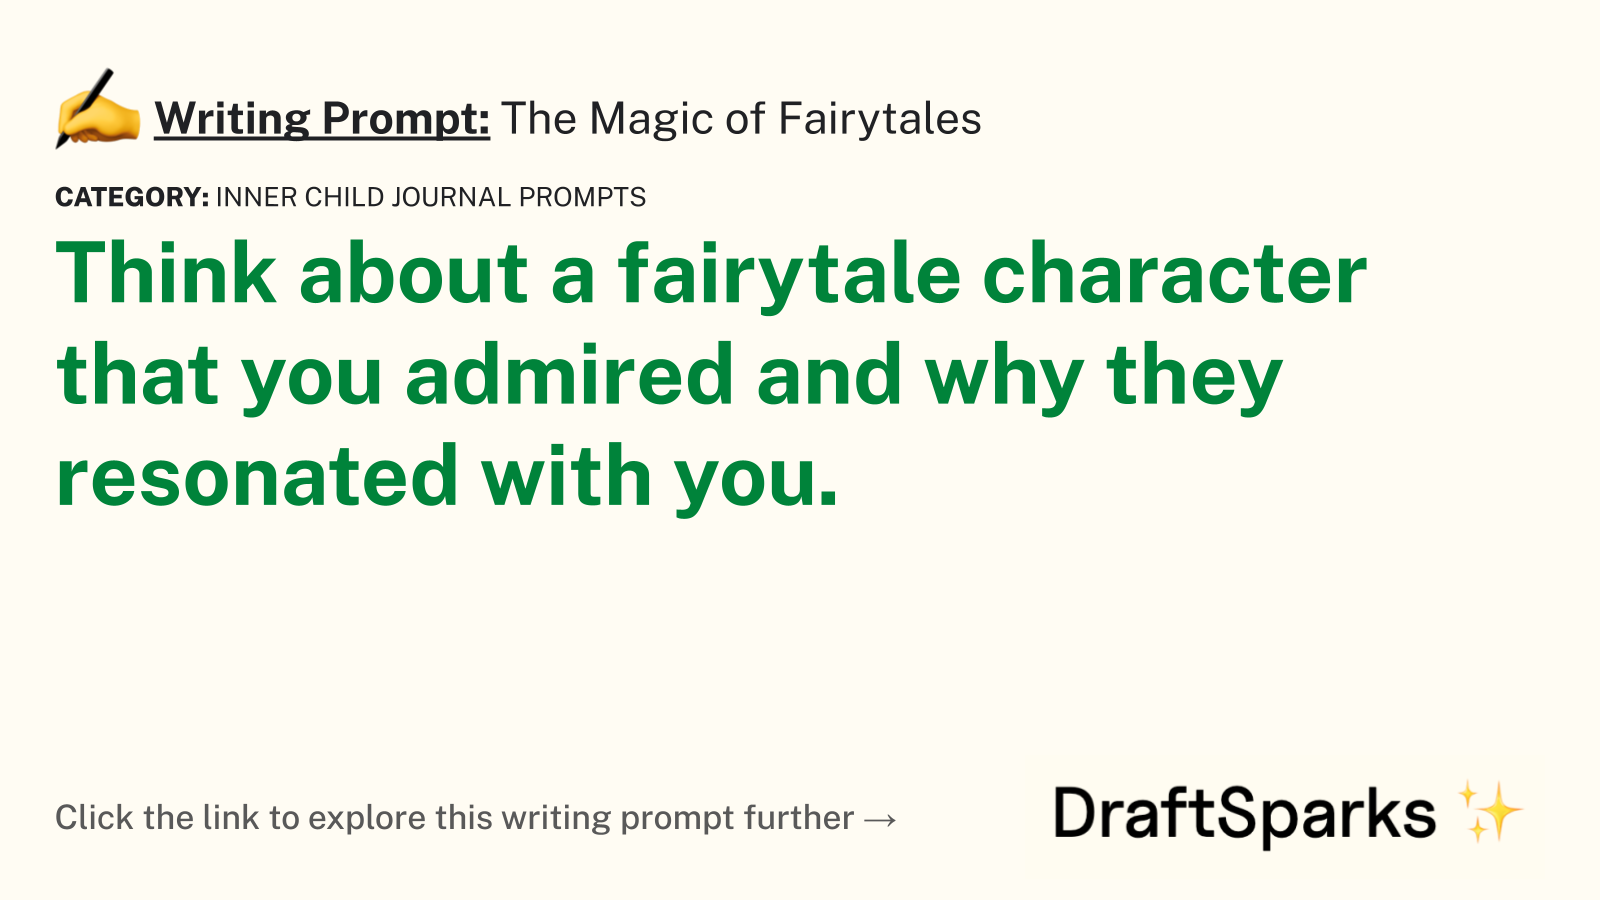 The Magic of Fairytales